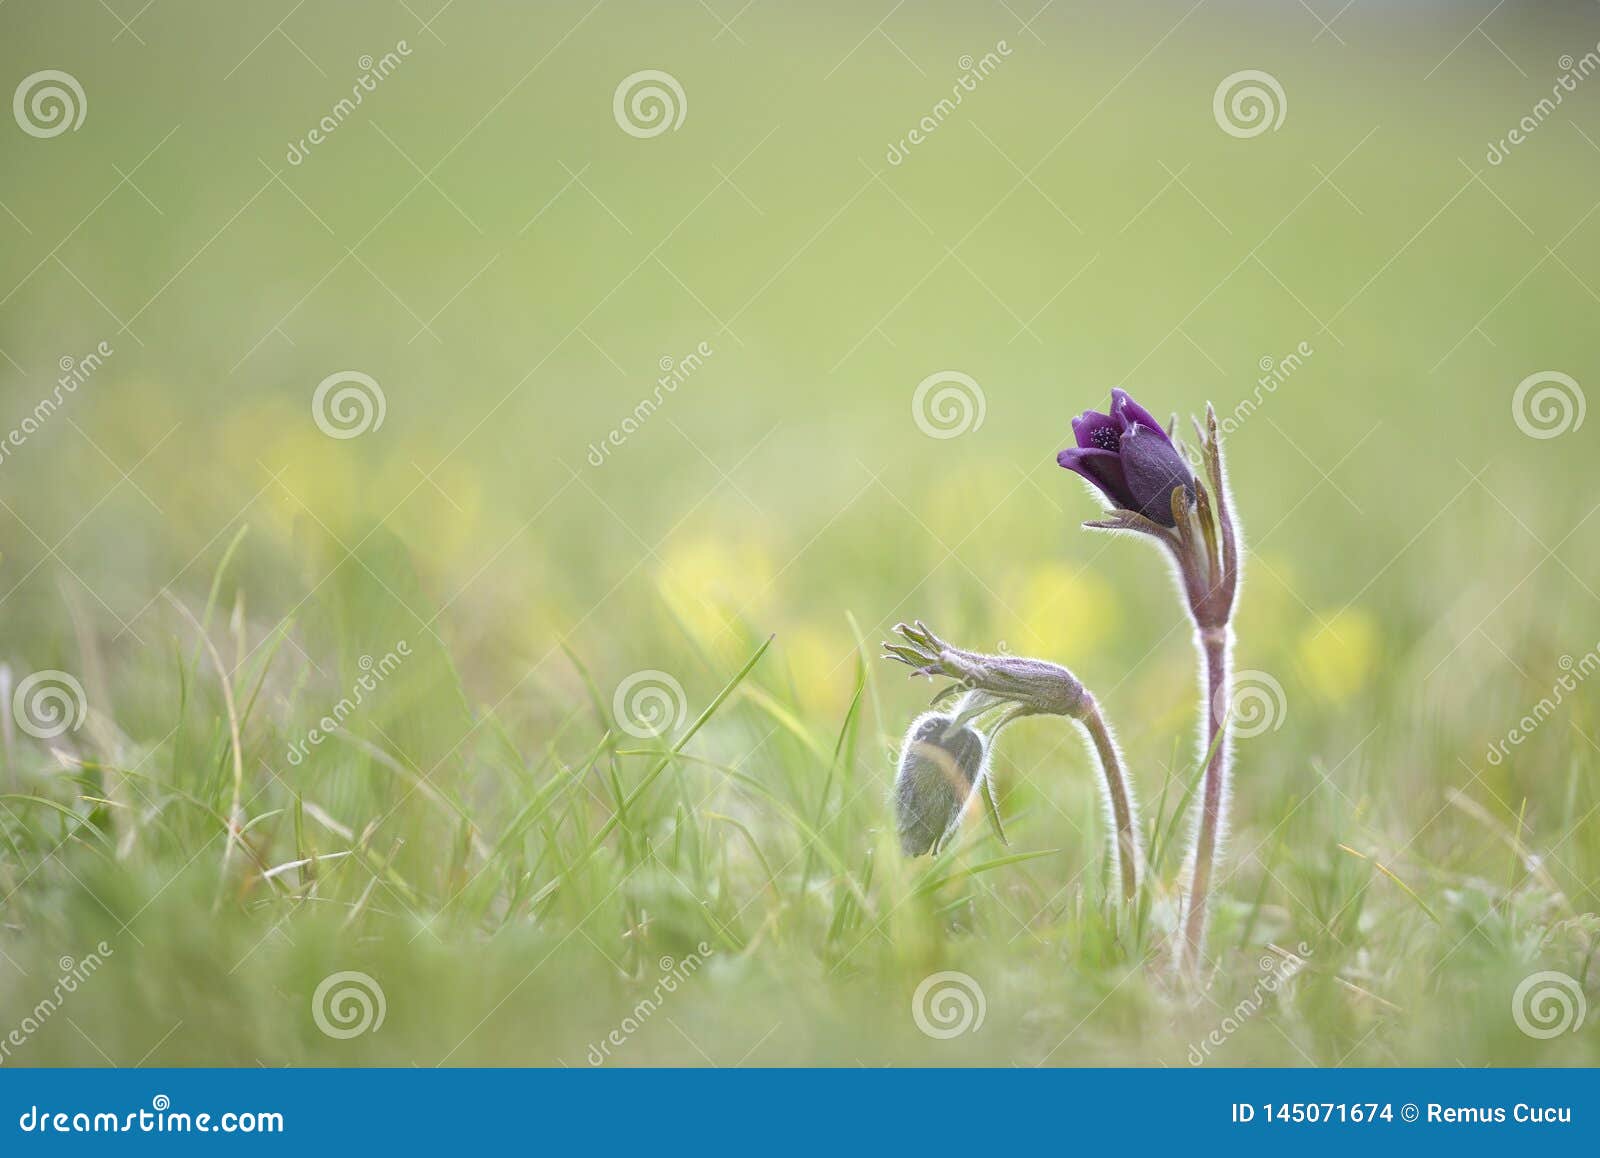 pulsatilla pratensis ssp, nigricans - small pasque flower, rare endangered species